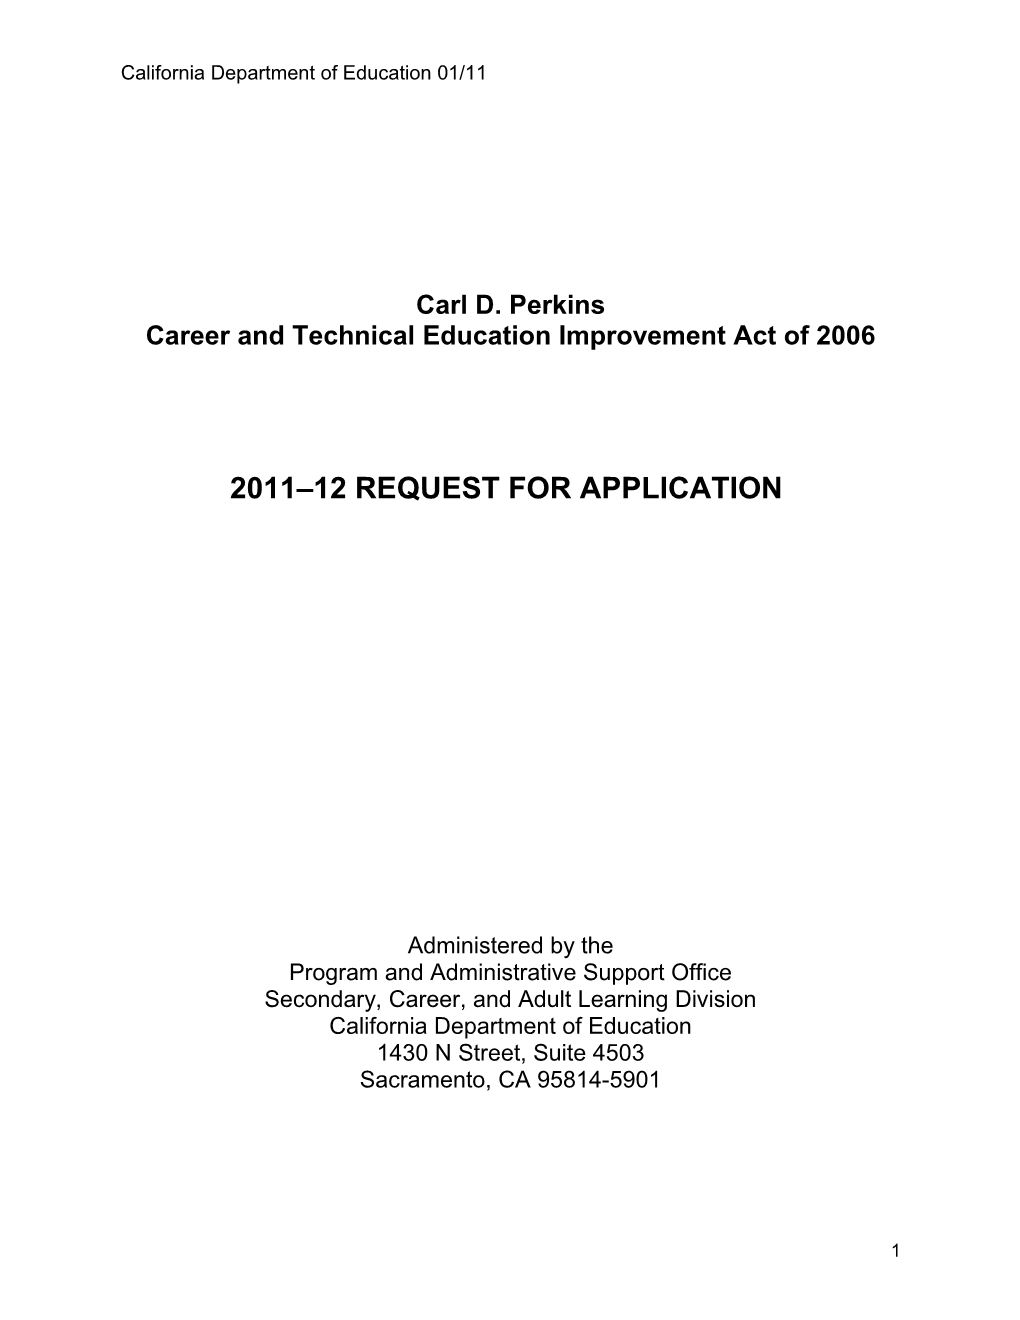 Att-11: Perkins Career and Technical Ed (CA Dept of Education)